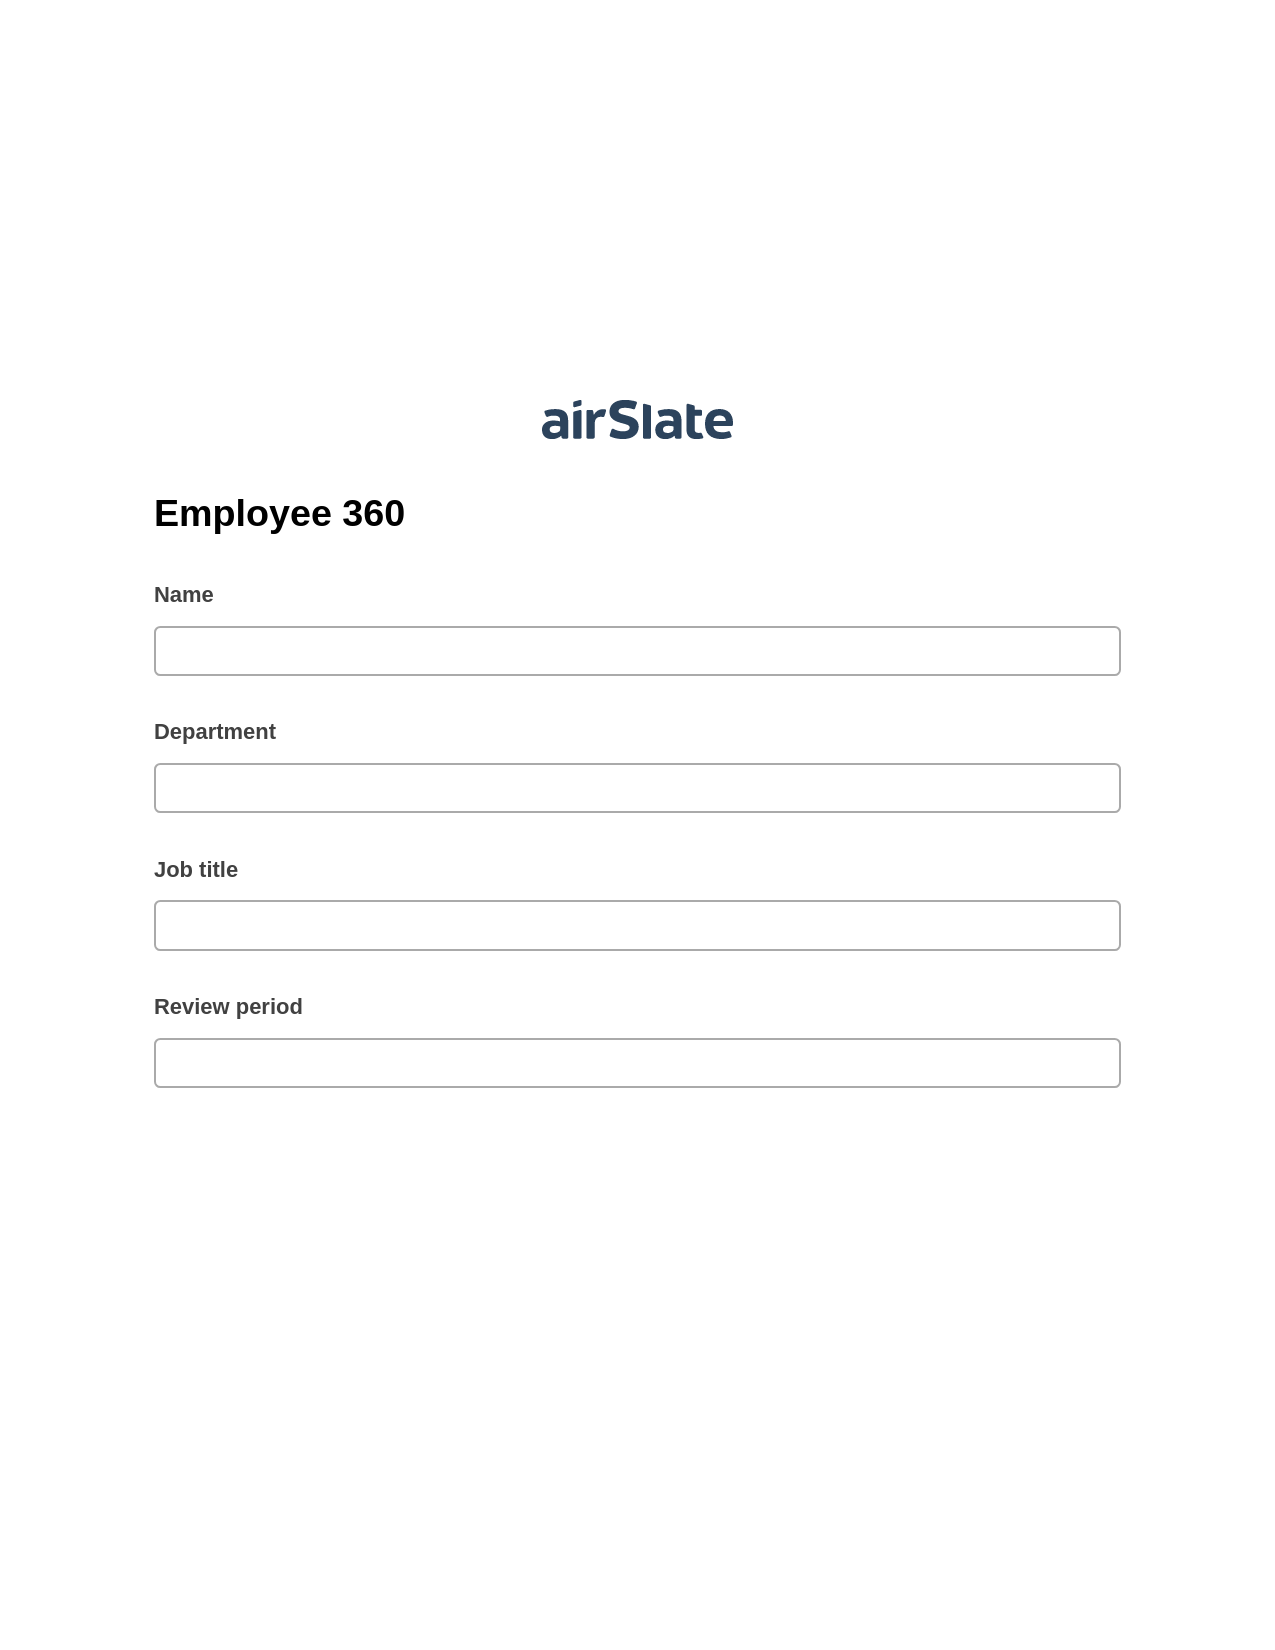 Multirole Employee 360 Pre-fill from CSV File Bot, Create Slate every Google Sheet Update Bot, Archive to SharePoint Folder Bot